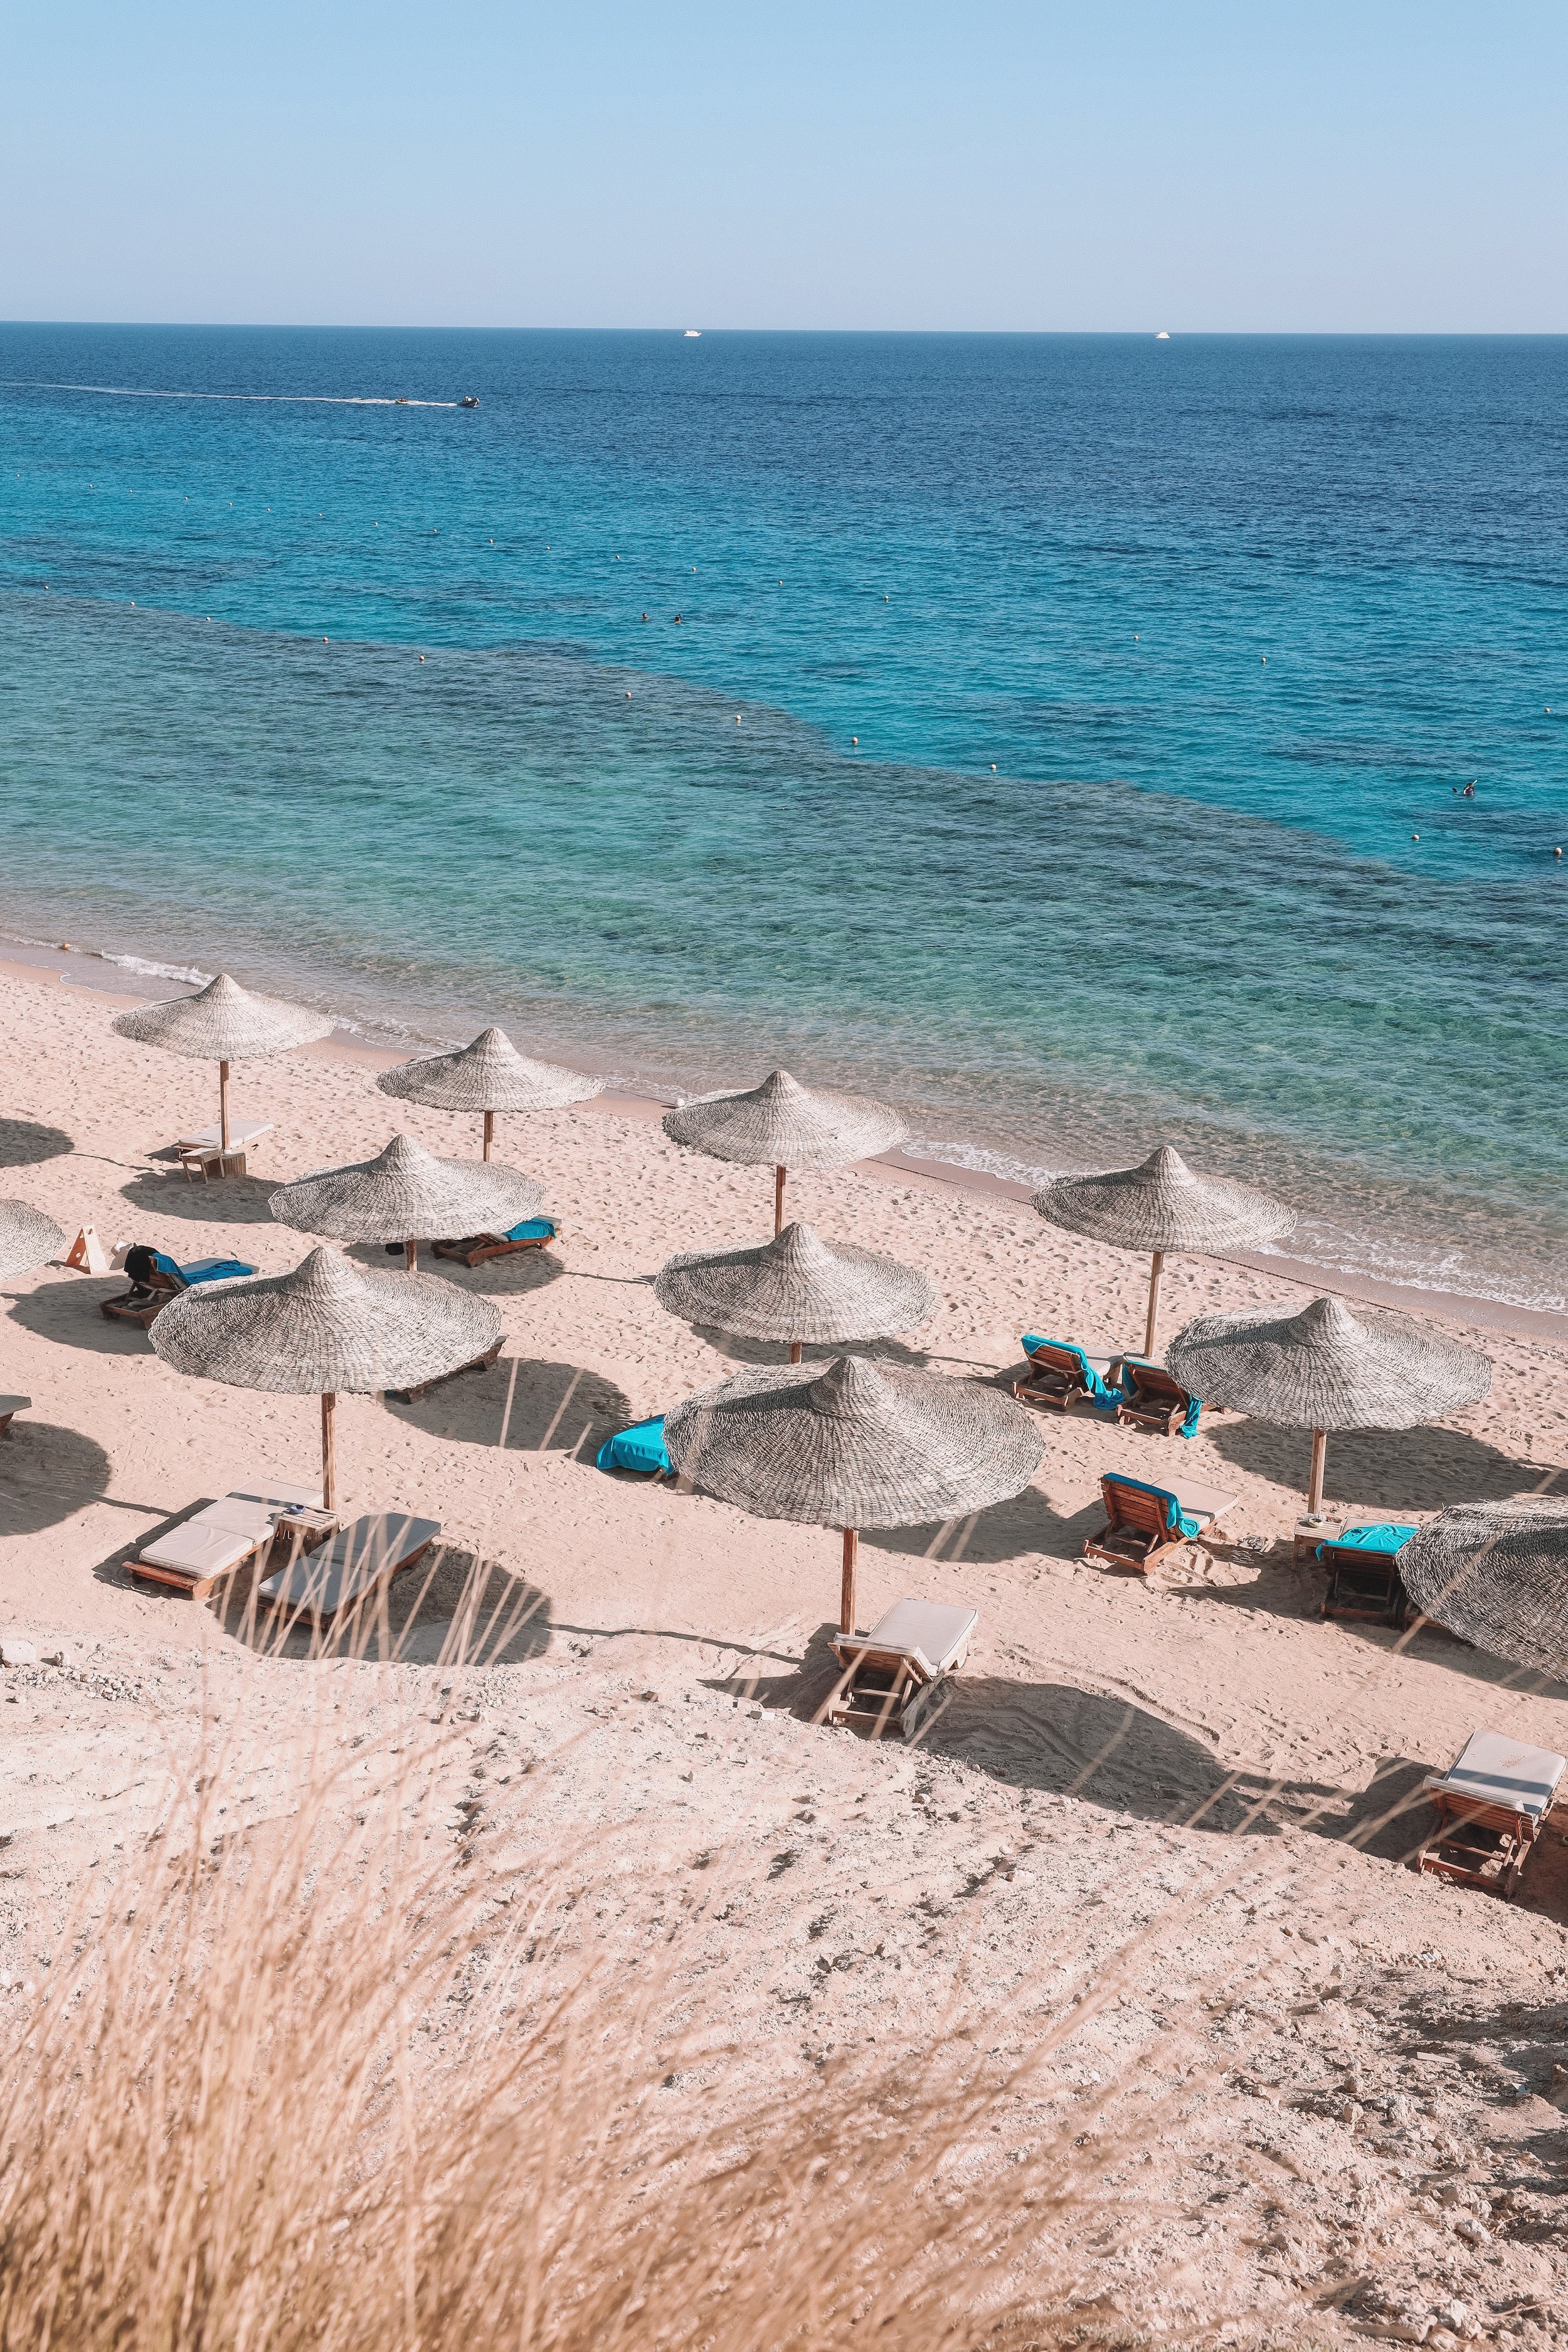 Secluded private beach and umbrellas - Mövenpick - Sharm El-Sheikh - Sinai Peninsula - Egypt